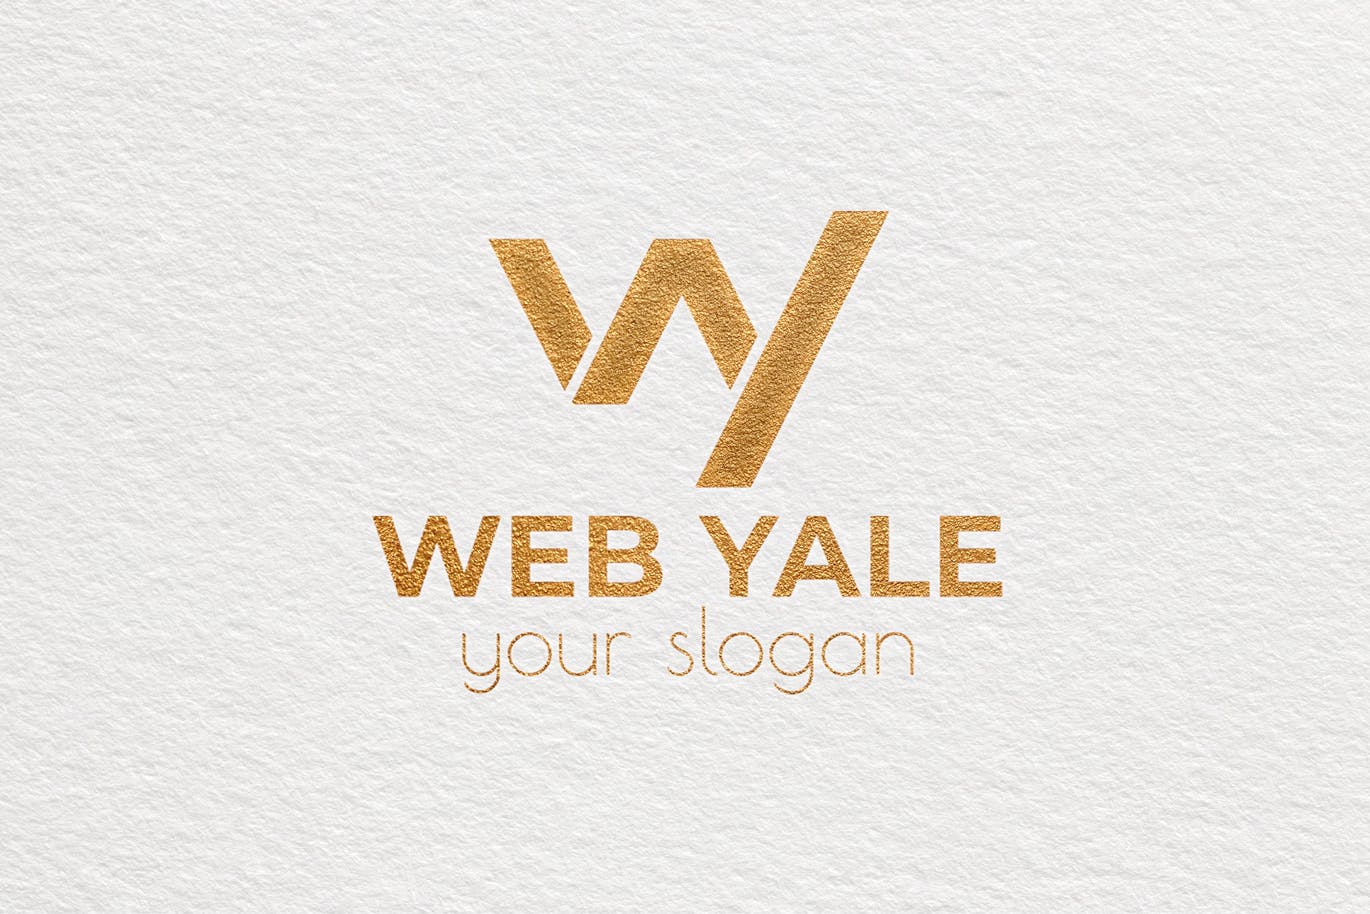 W&Y字母组合几何图形现代Logo设计第一素材精选模板 Web Yale Modern Logo Template插图(3)